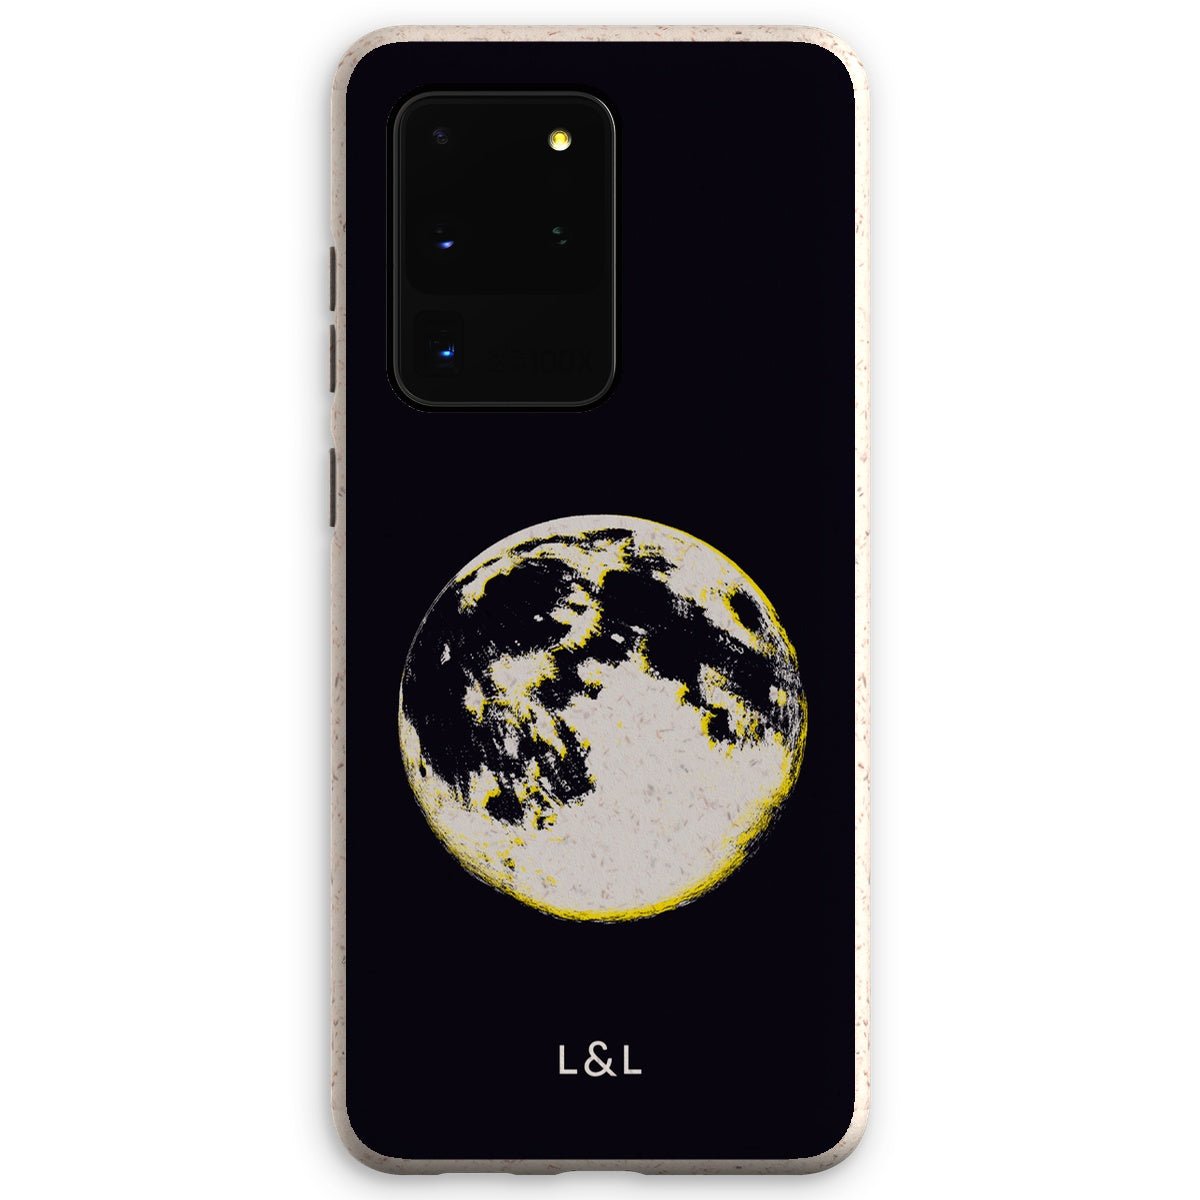 Neon moon Eco Phone Case - Loam & Lore